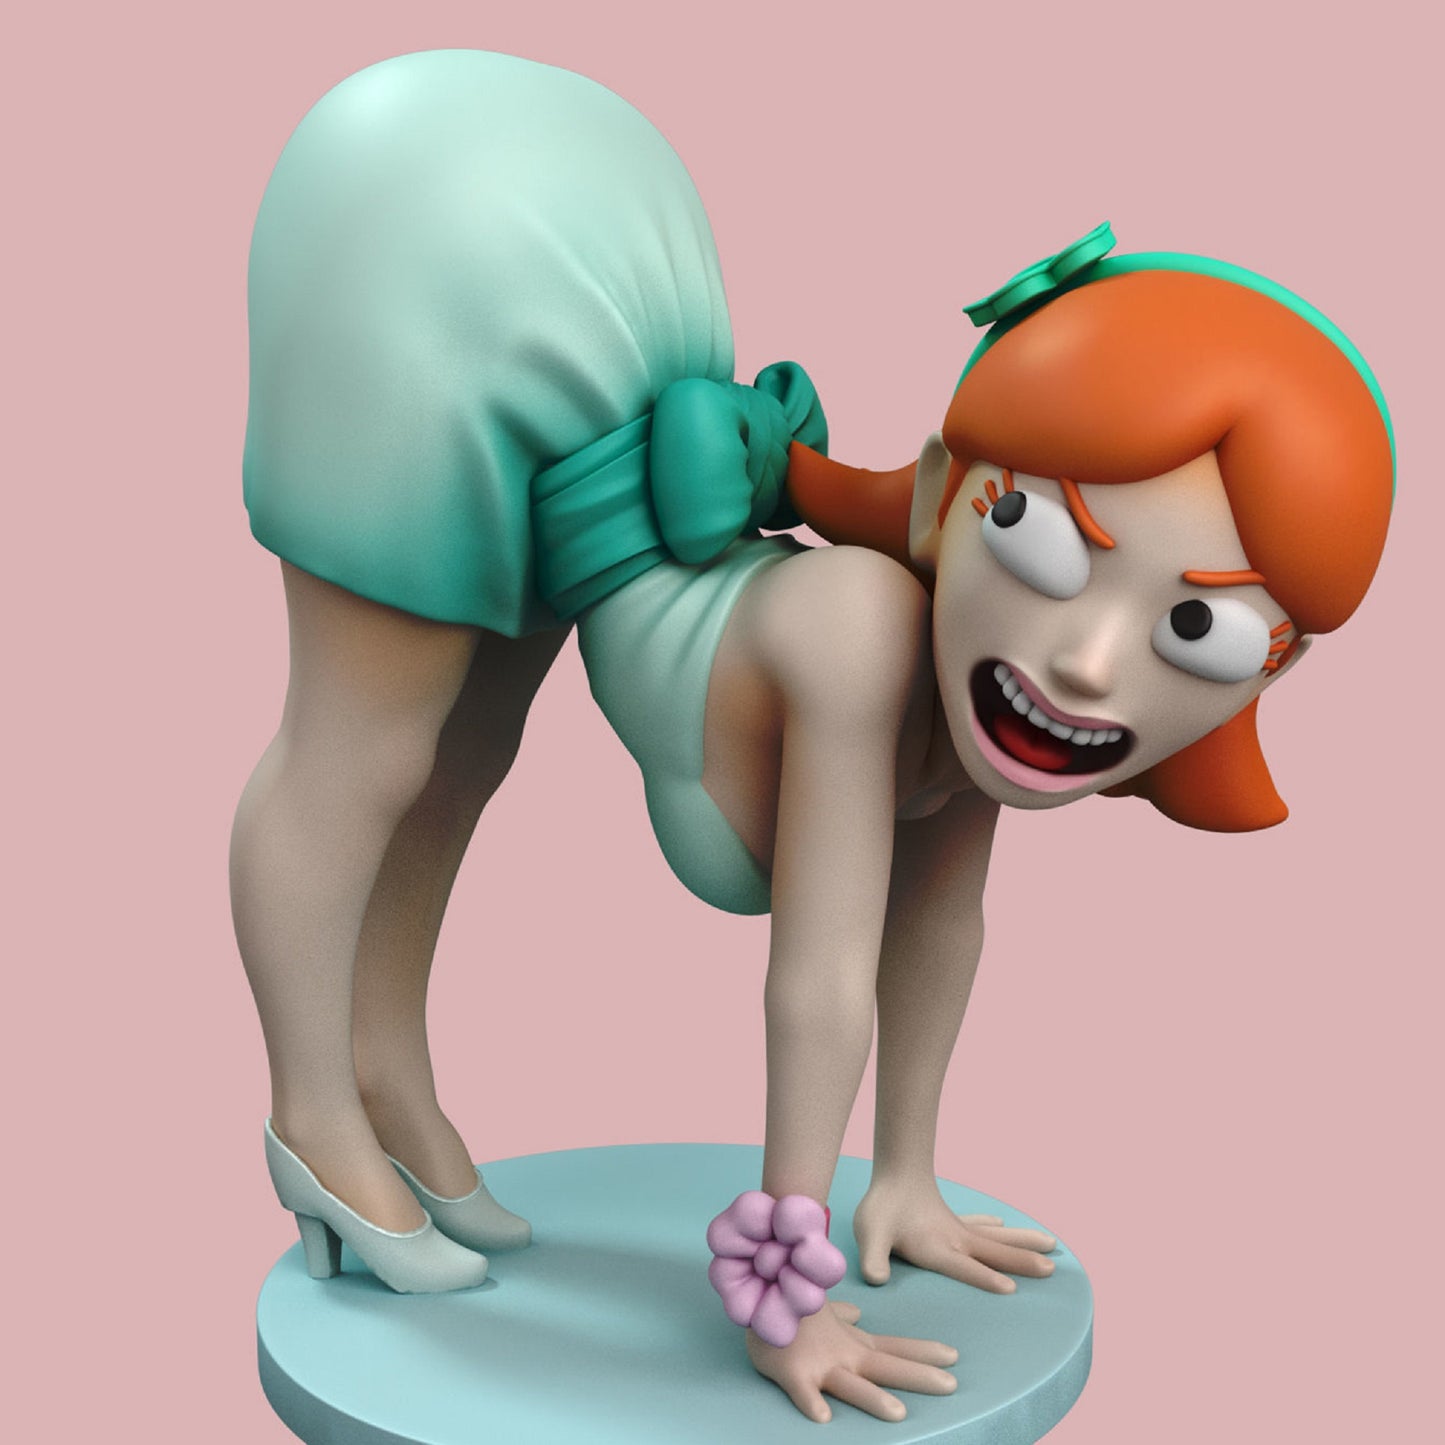 Twerking Girl NSFW Statuette